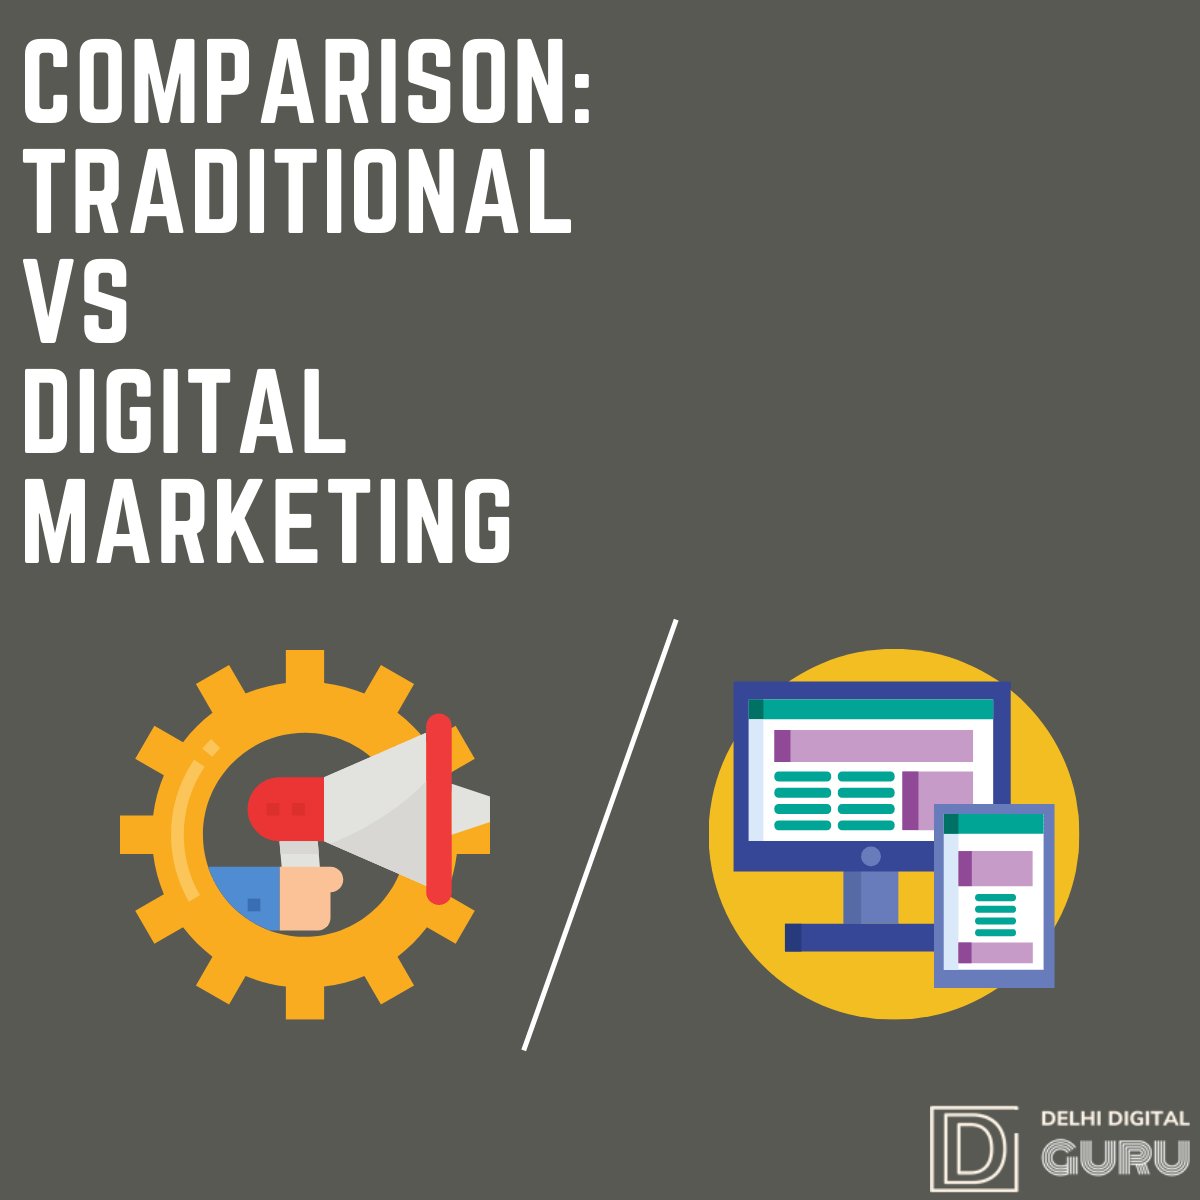 Comparison: Traditional vs Digital Marketing